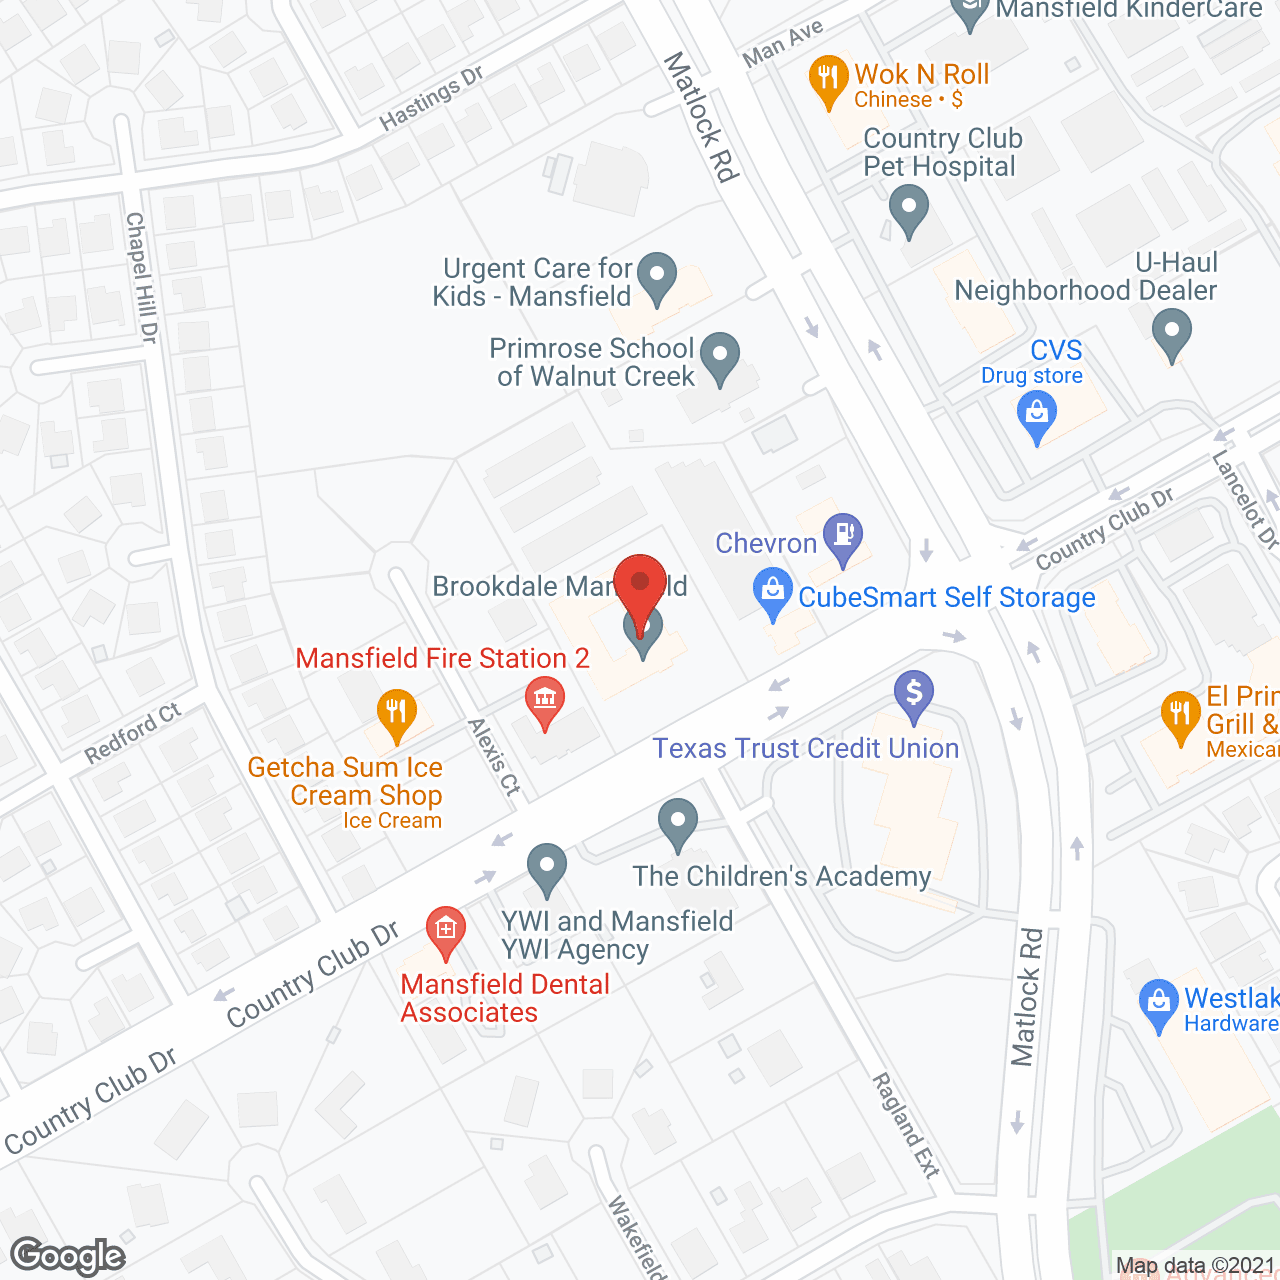 Brookdale Mansfield in google map